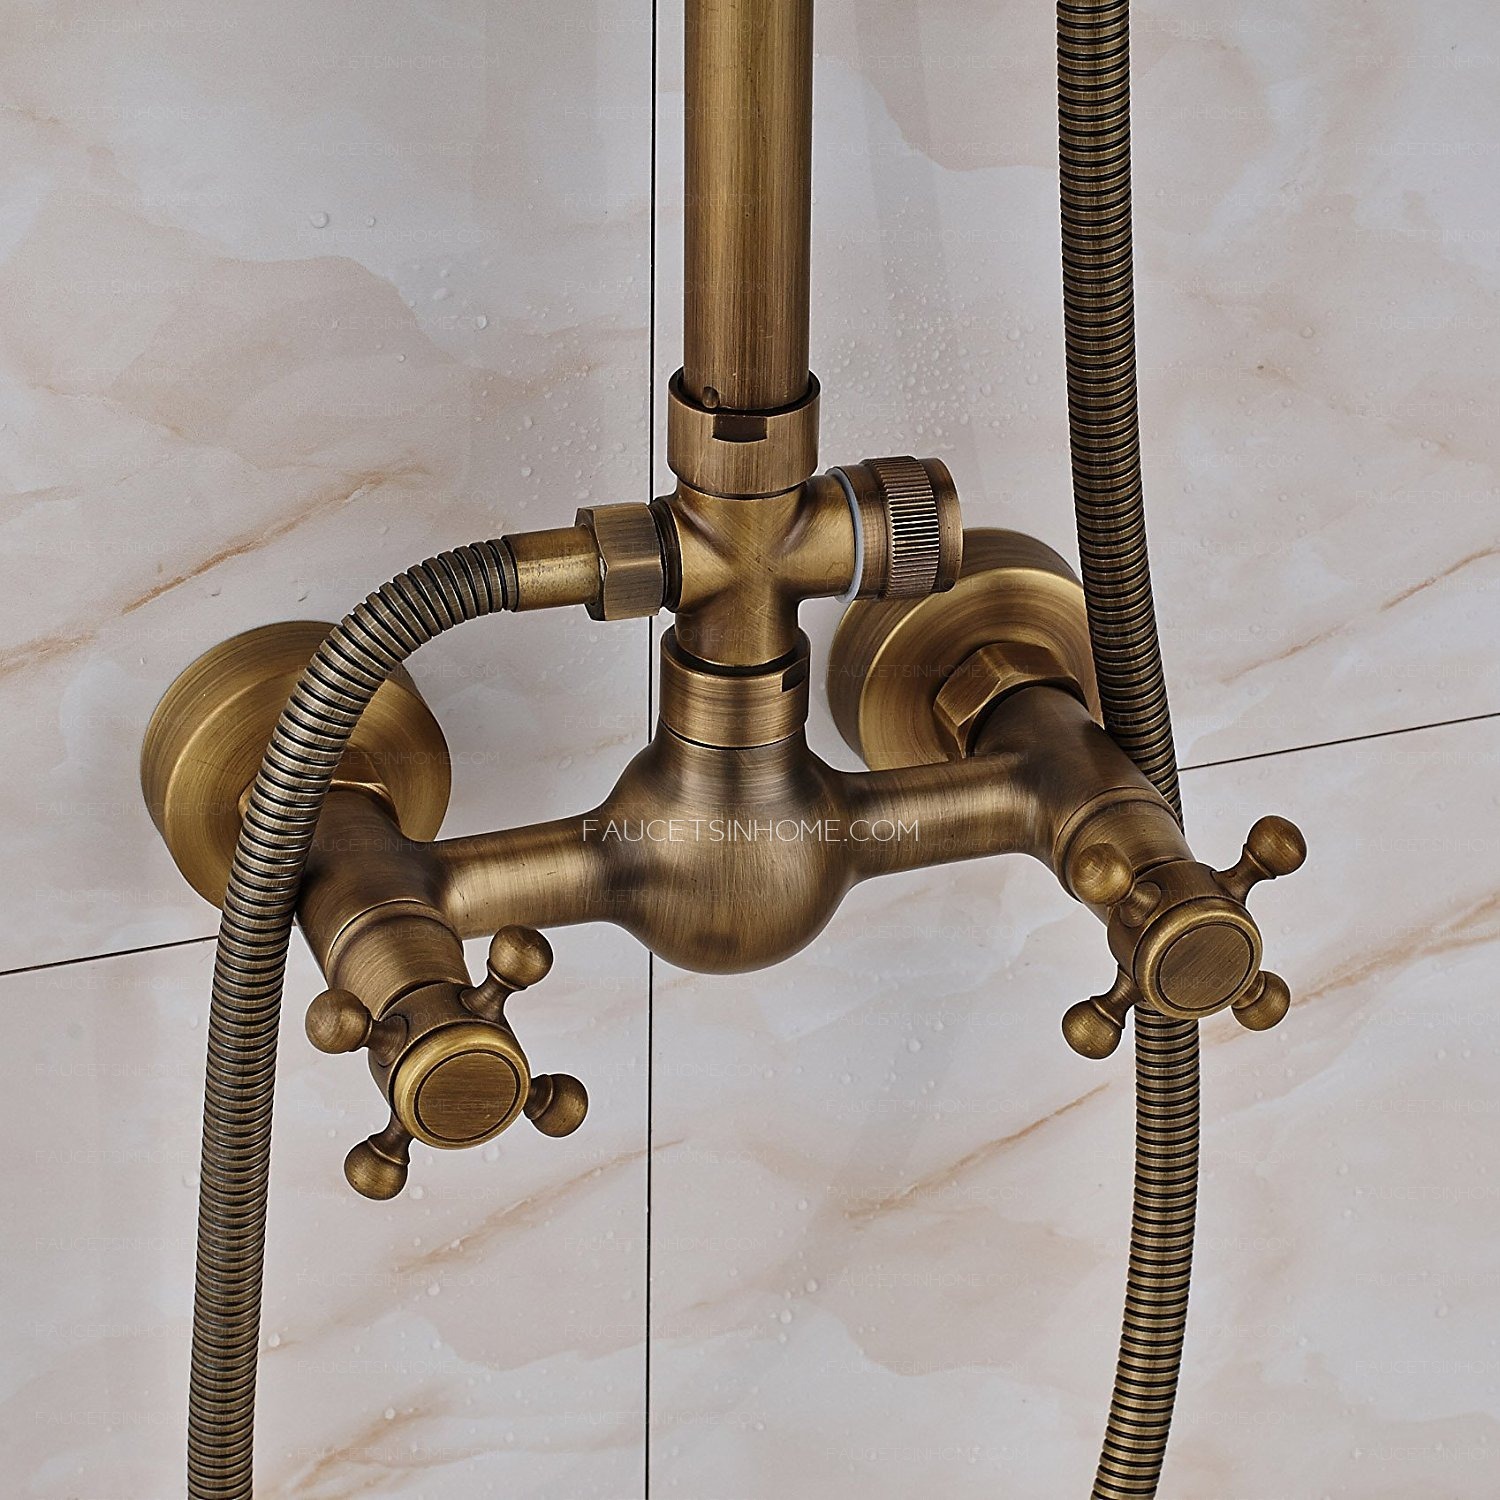 Antique Brass Rainfall Shower Faucet Brushed Gold Shower Head